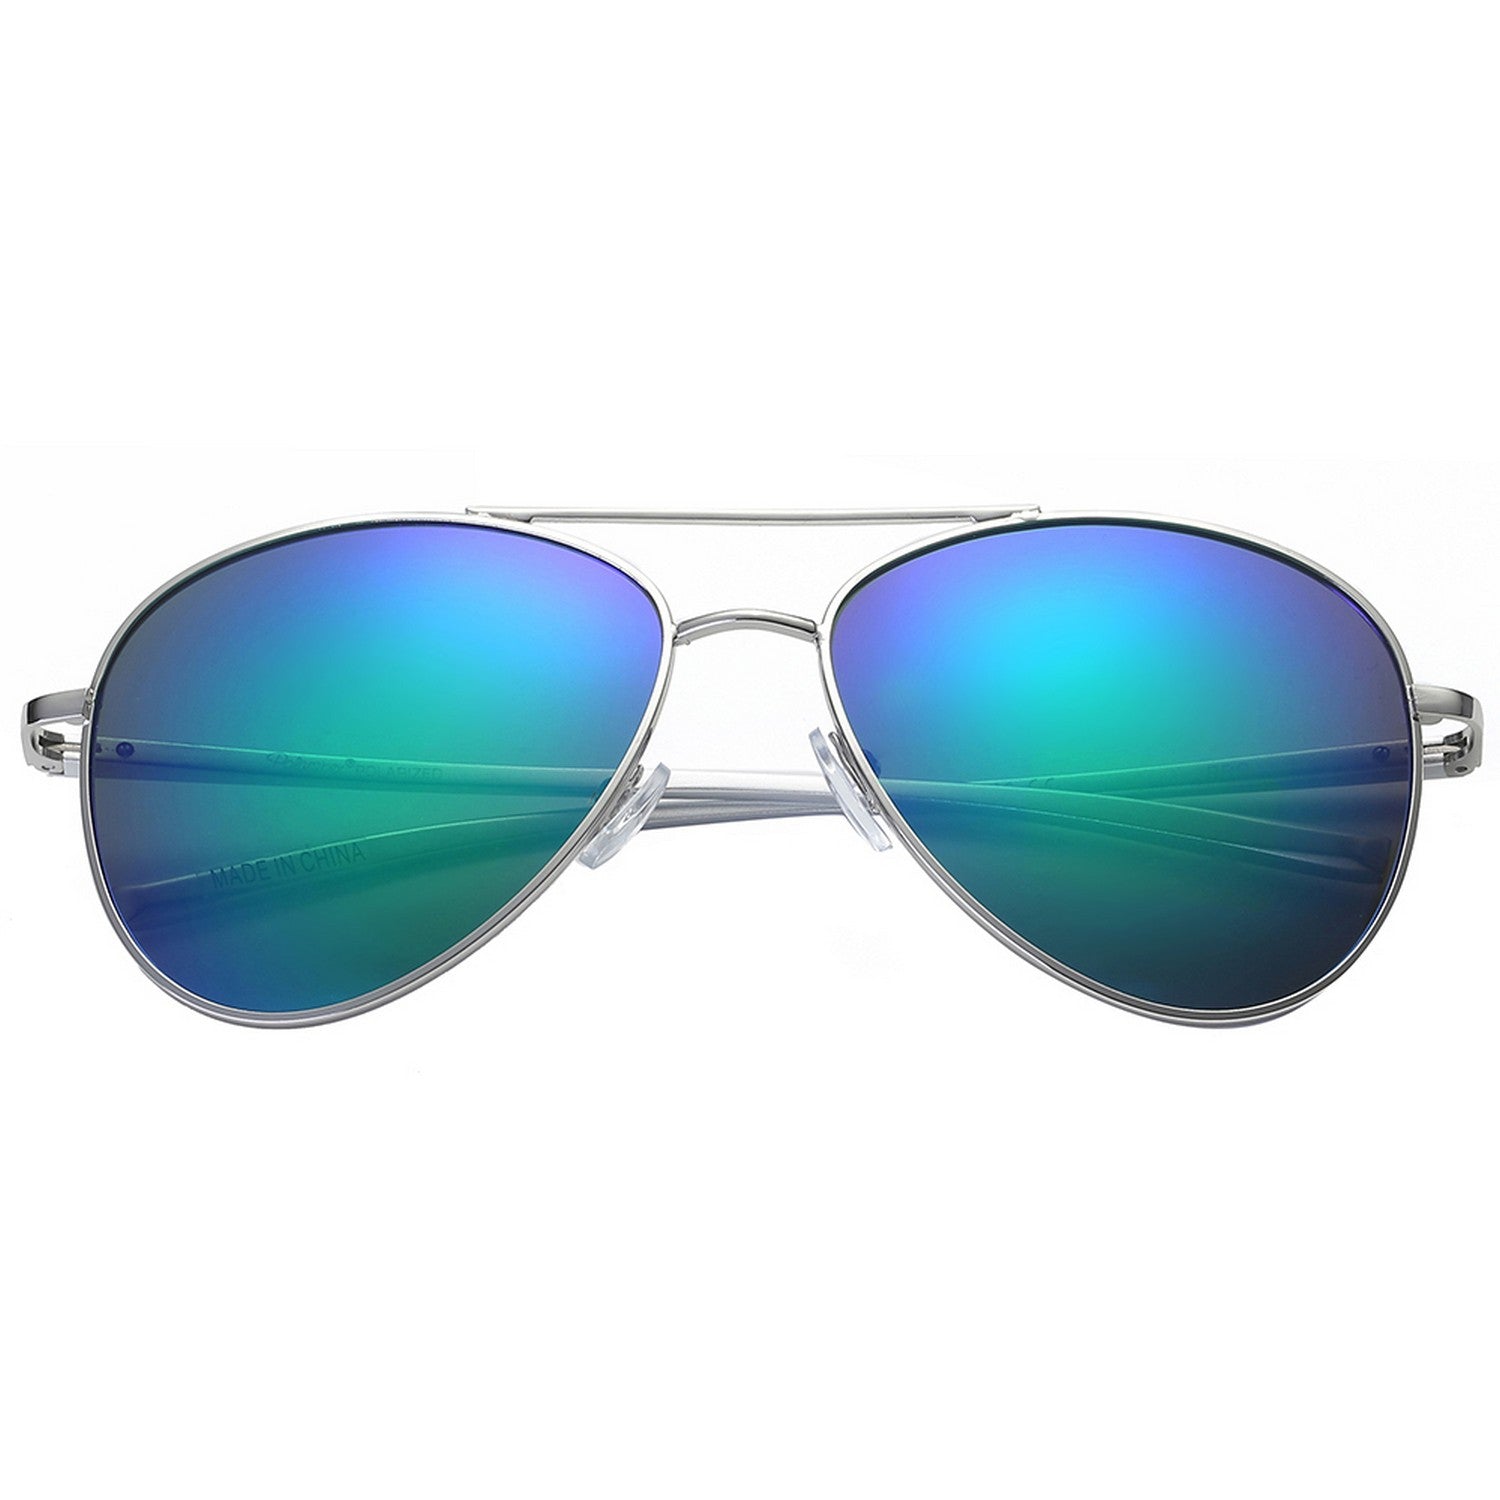 Polarspex Polarized Aviator Style Sunglasses with Aluminum Silver Frames and Polarized Kryptonite Lenses for Men and Women